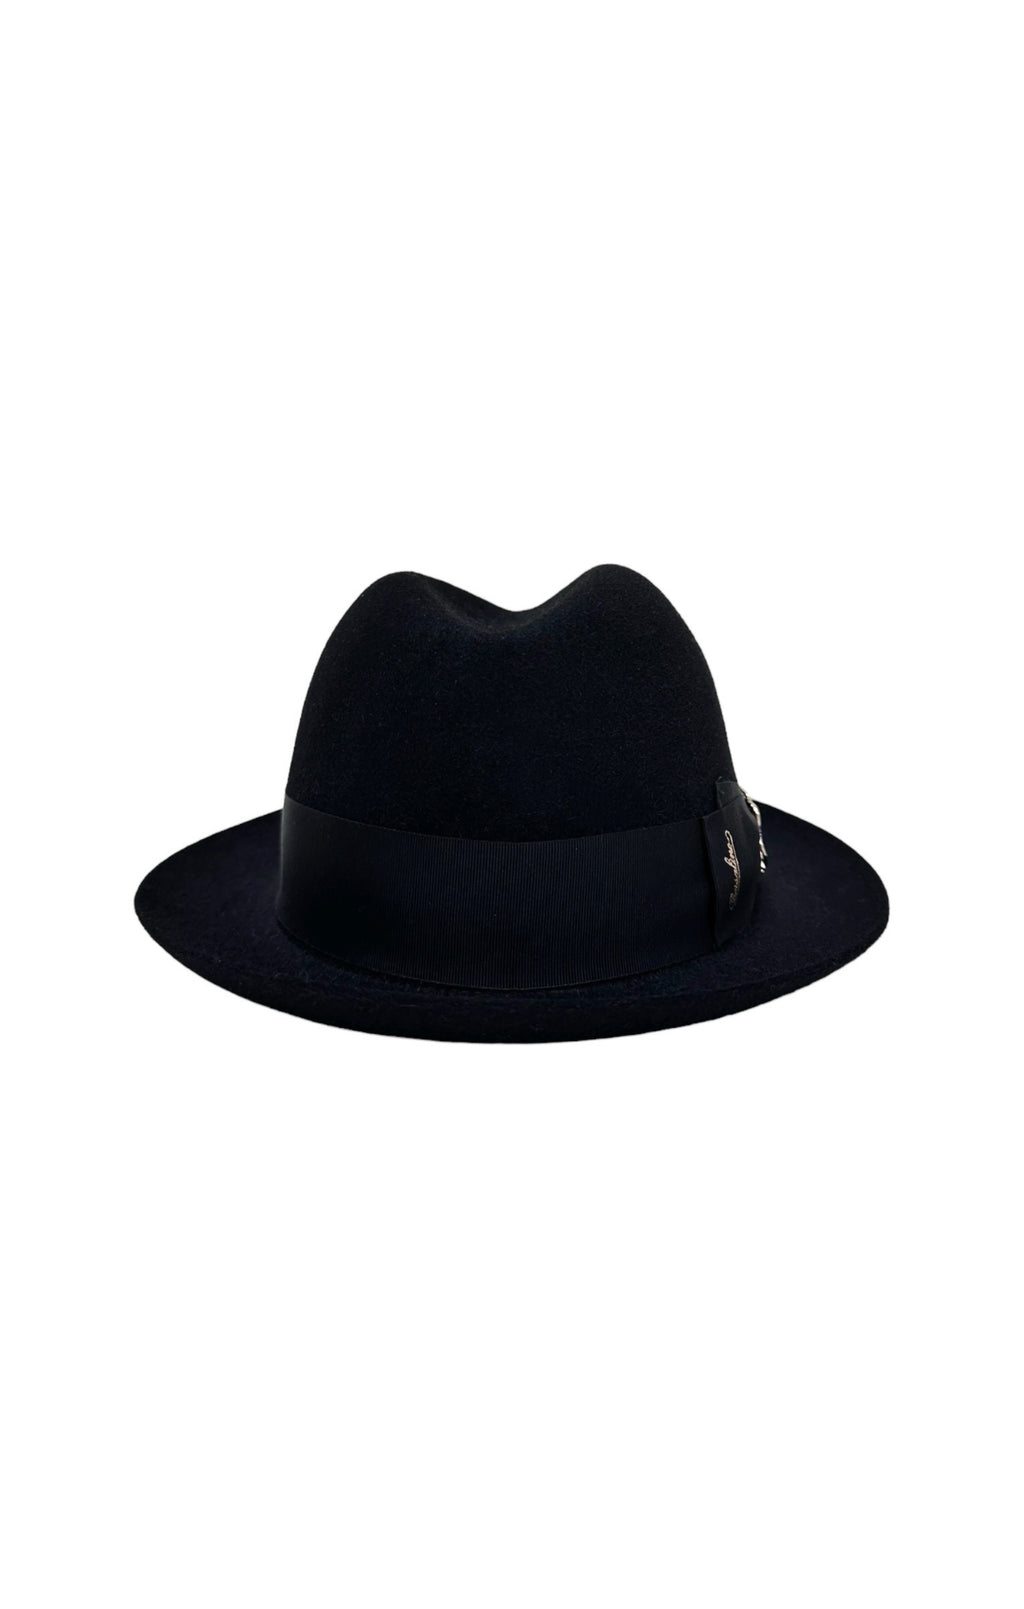 NILA BORSALINO x ELIE SAAB (NEW) with tags Hat Size: M